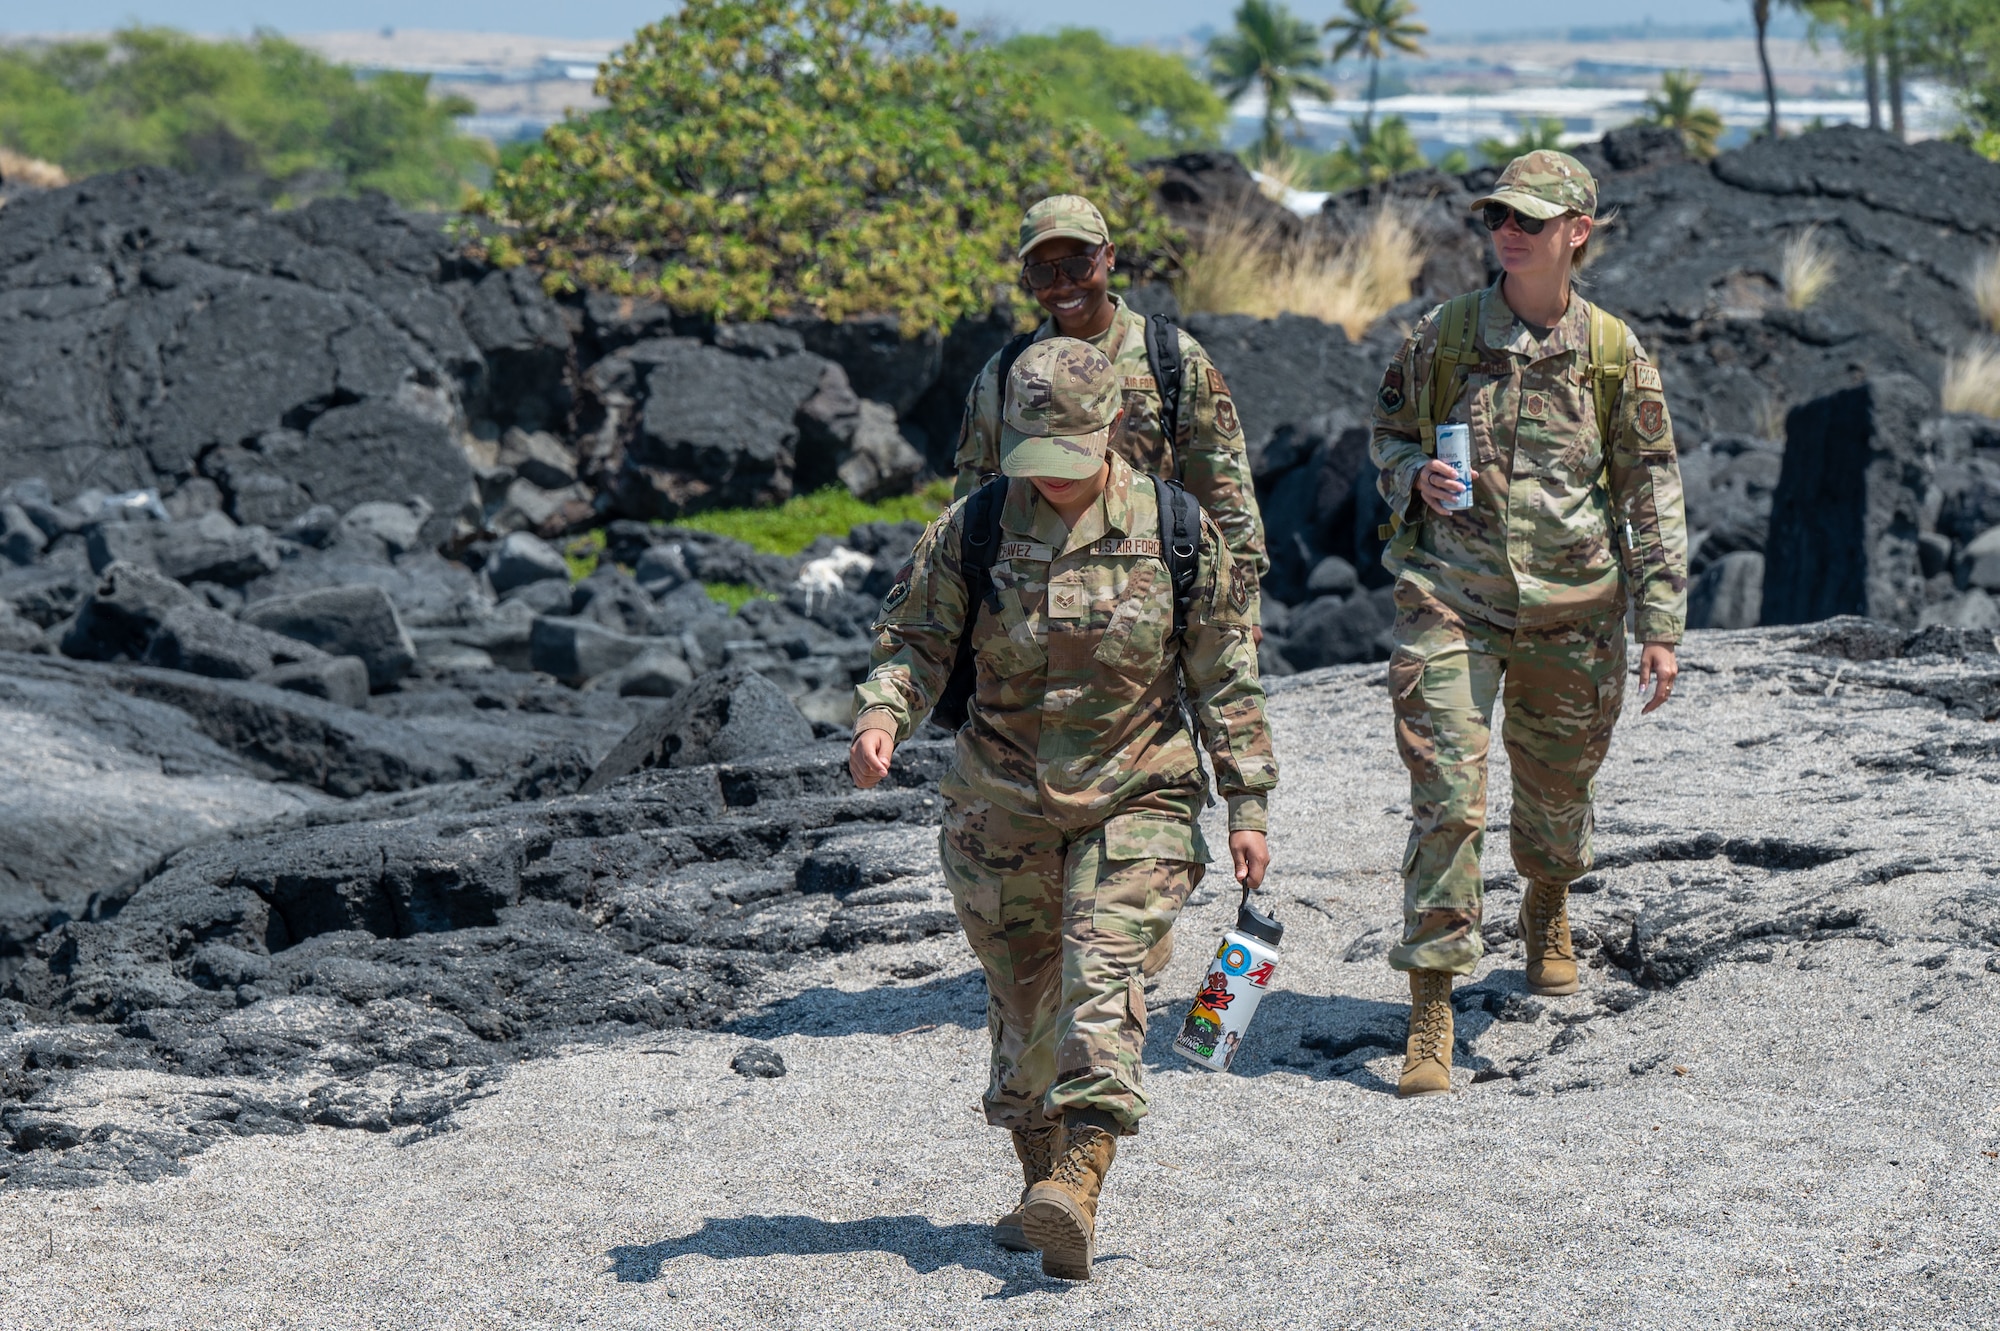 three people in military uniforms walk along a sandy beach